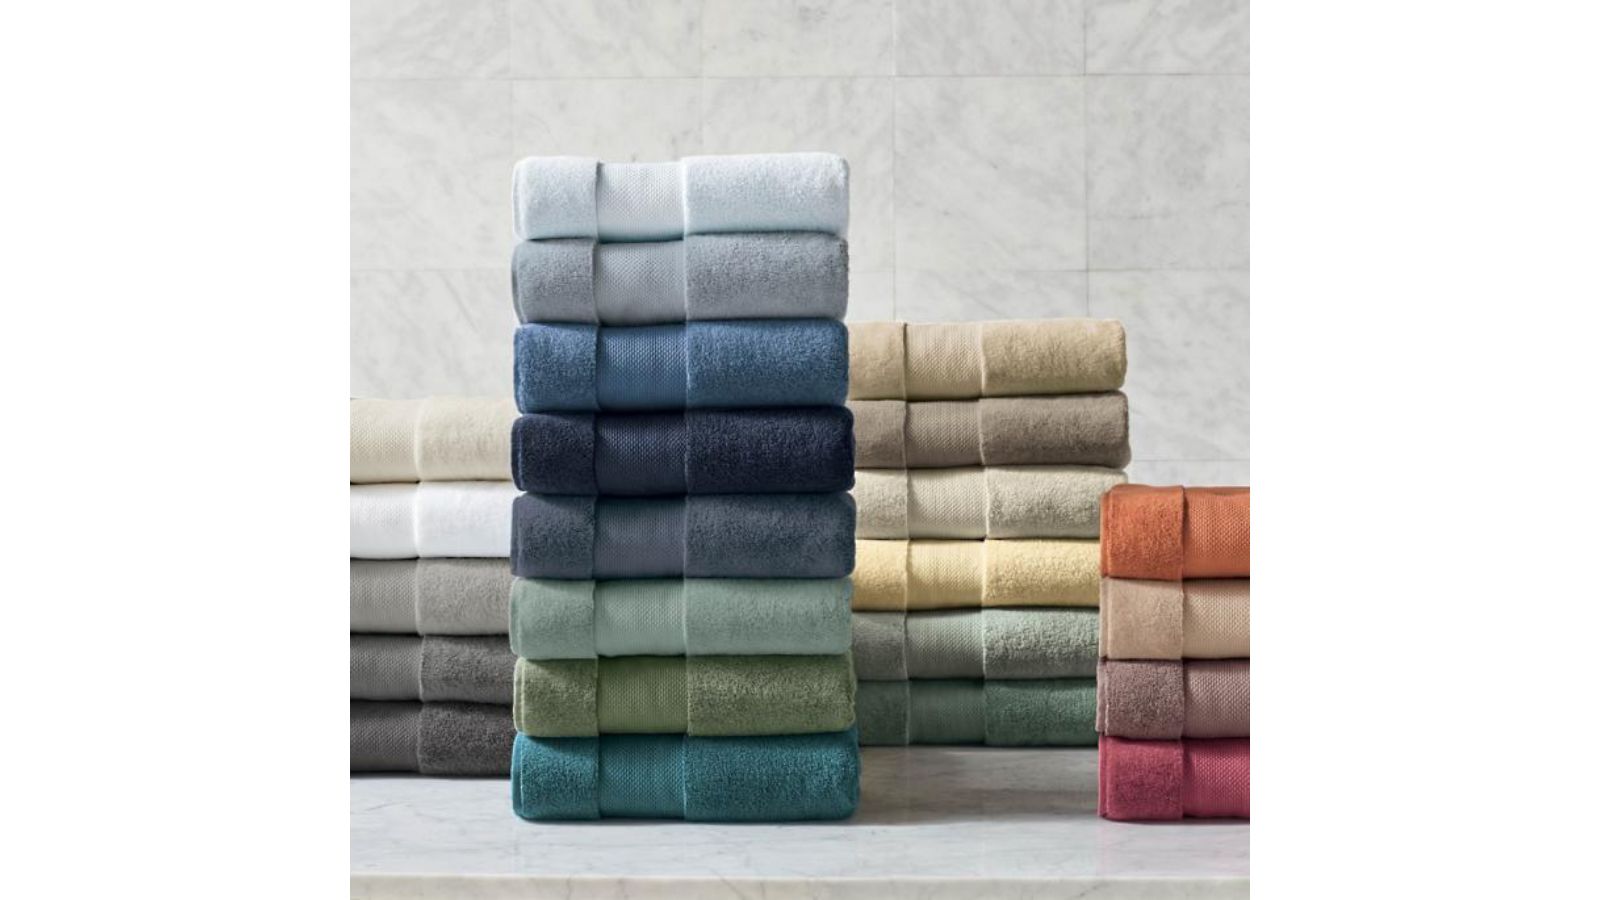 https://media.cnn.com/api/v1/images/stellar/prod/211213094823-frontgate-bed-bath-essentials-resort-cotton-bath-towels.jpg?q=h_900,w_1600,x_0,y_0